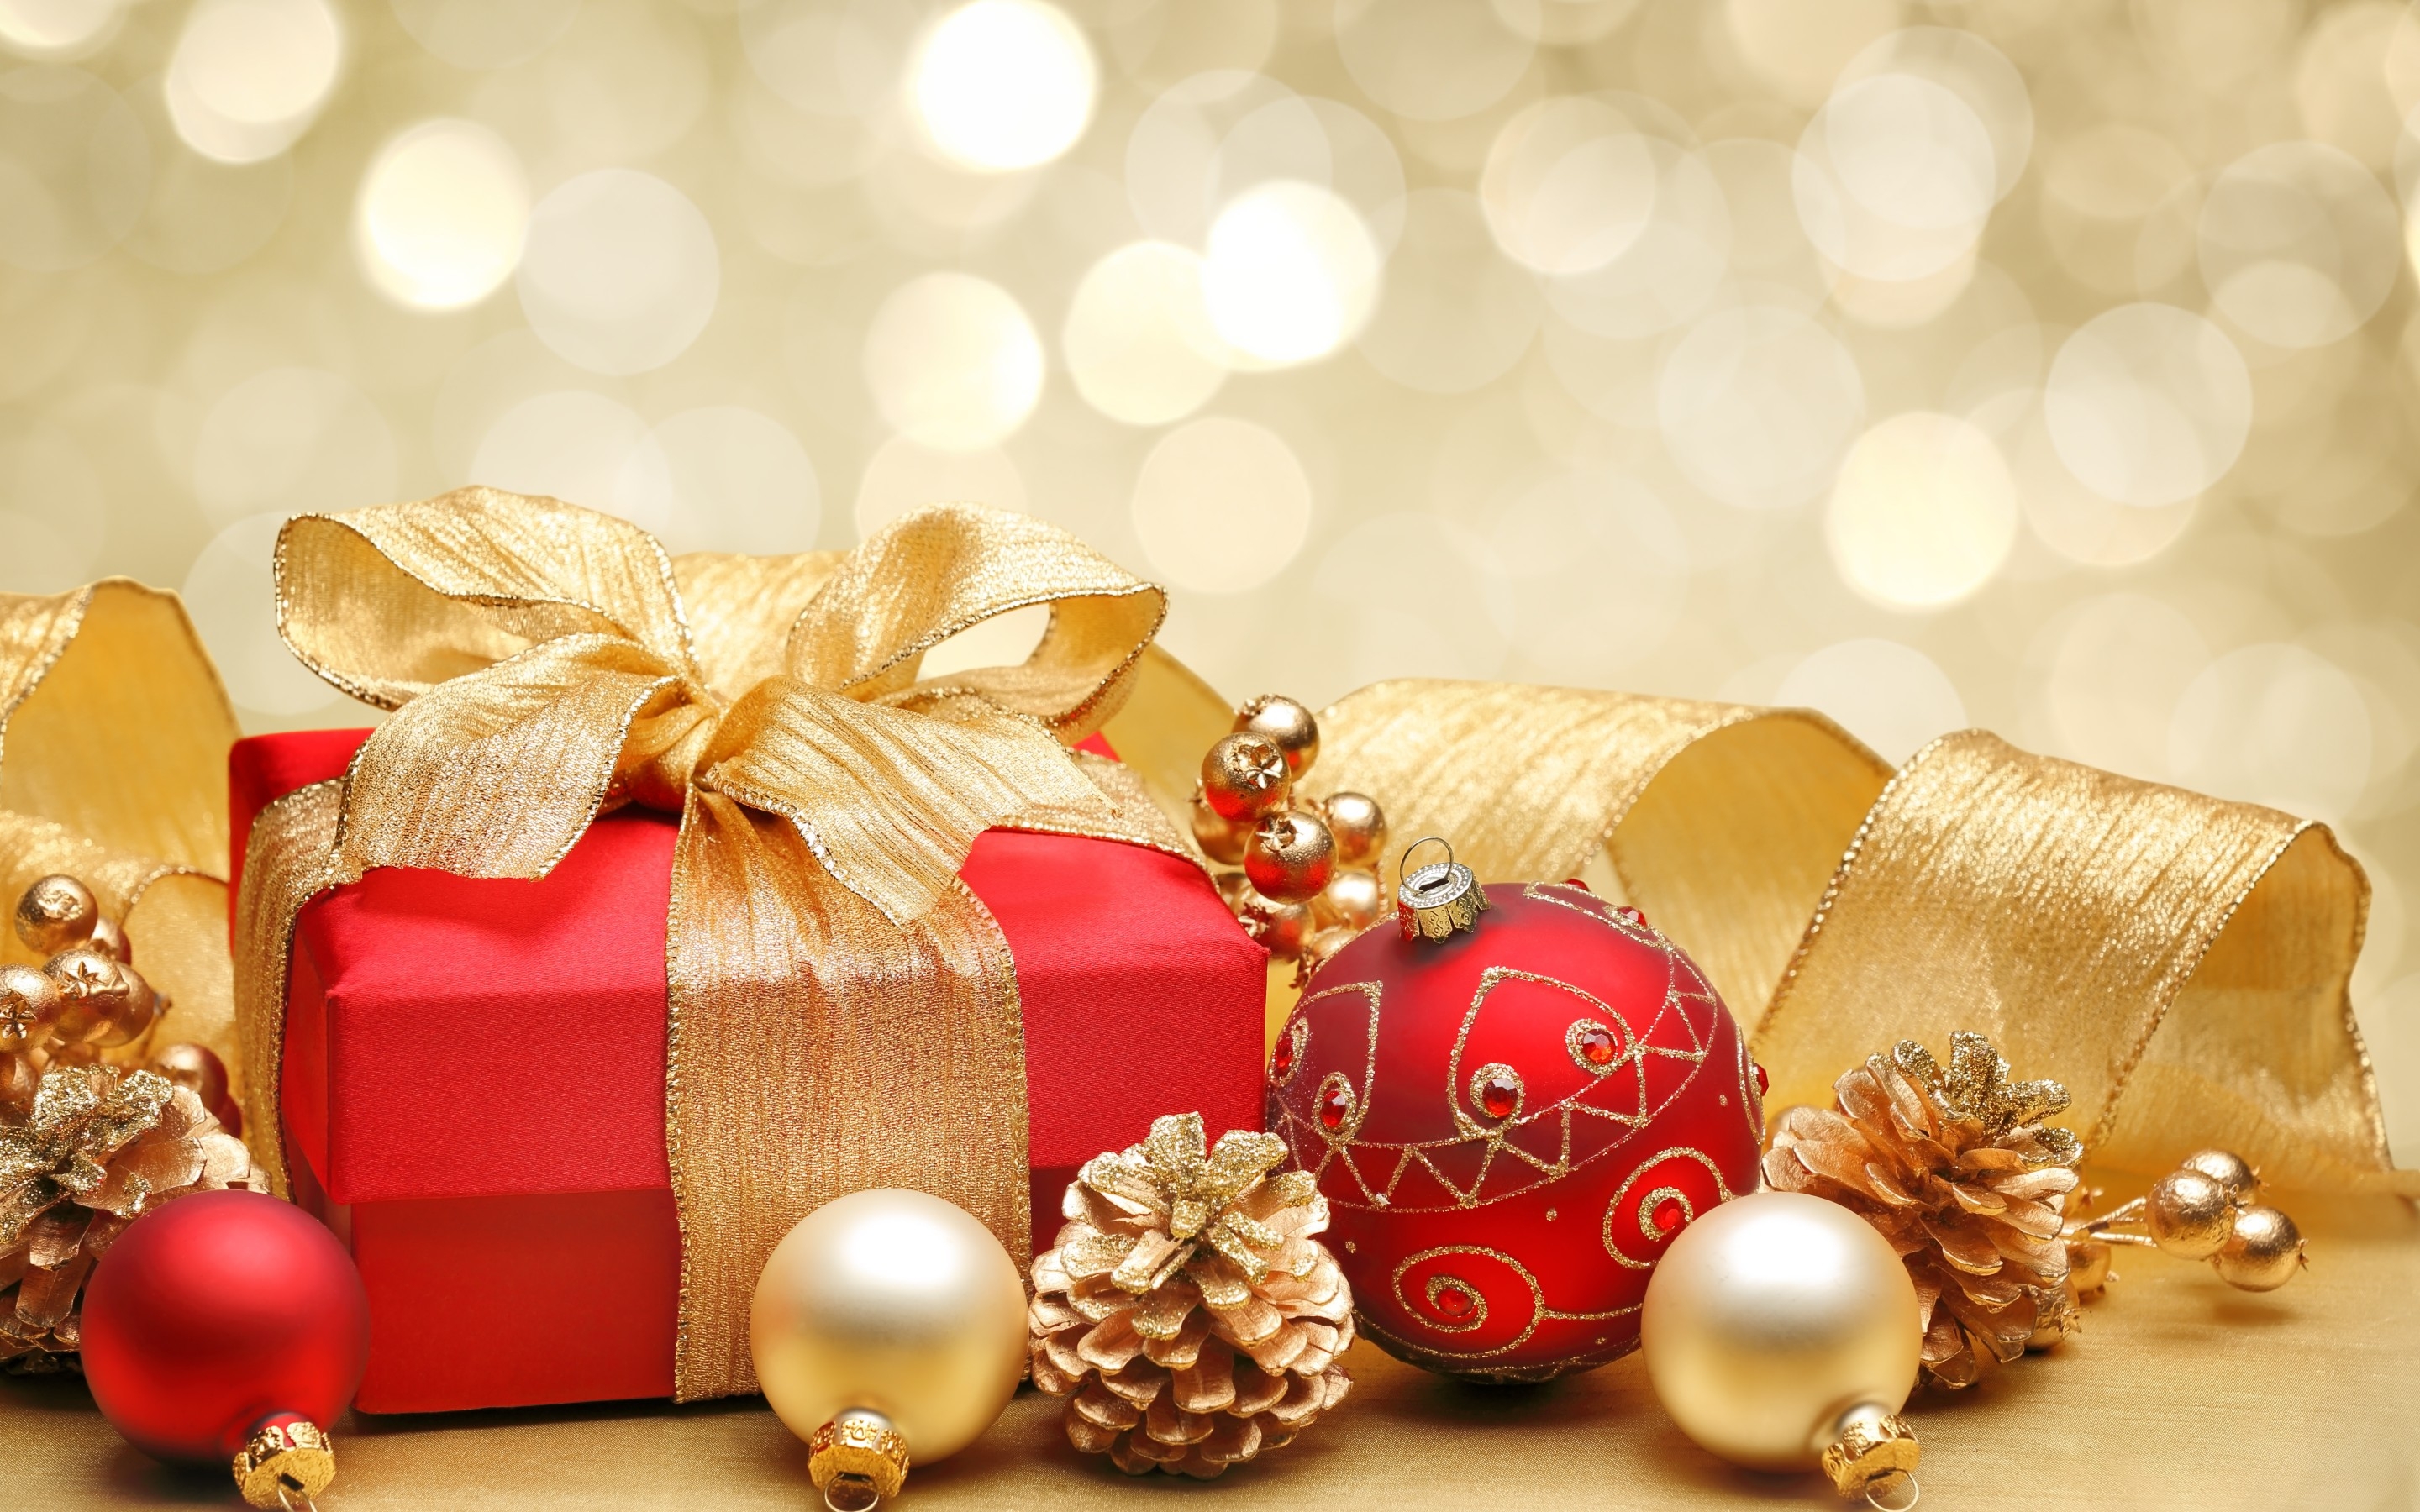 Christmas Gift Box and Decorations for 2880 x 1800 Retina Display resolution